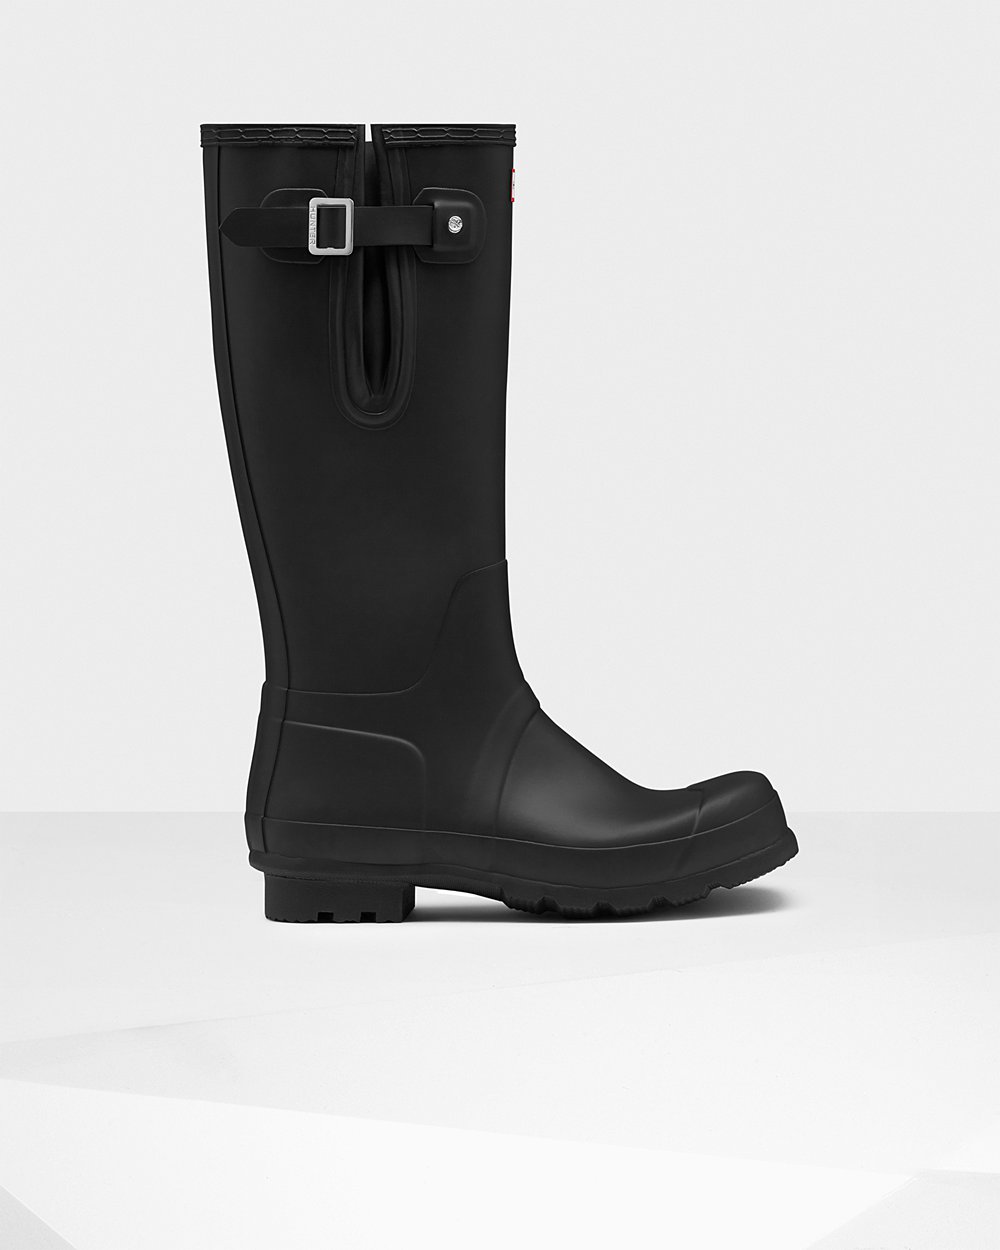 Mens Tall Rain Boots - Hunter Original Side Adjustable (45HAUVXGM) - Black